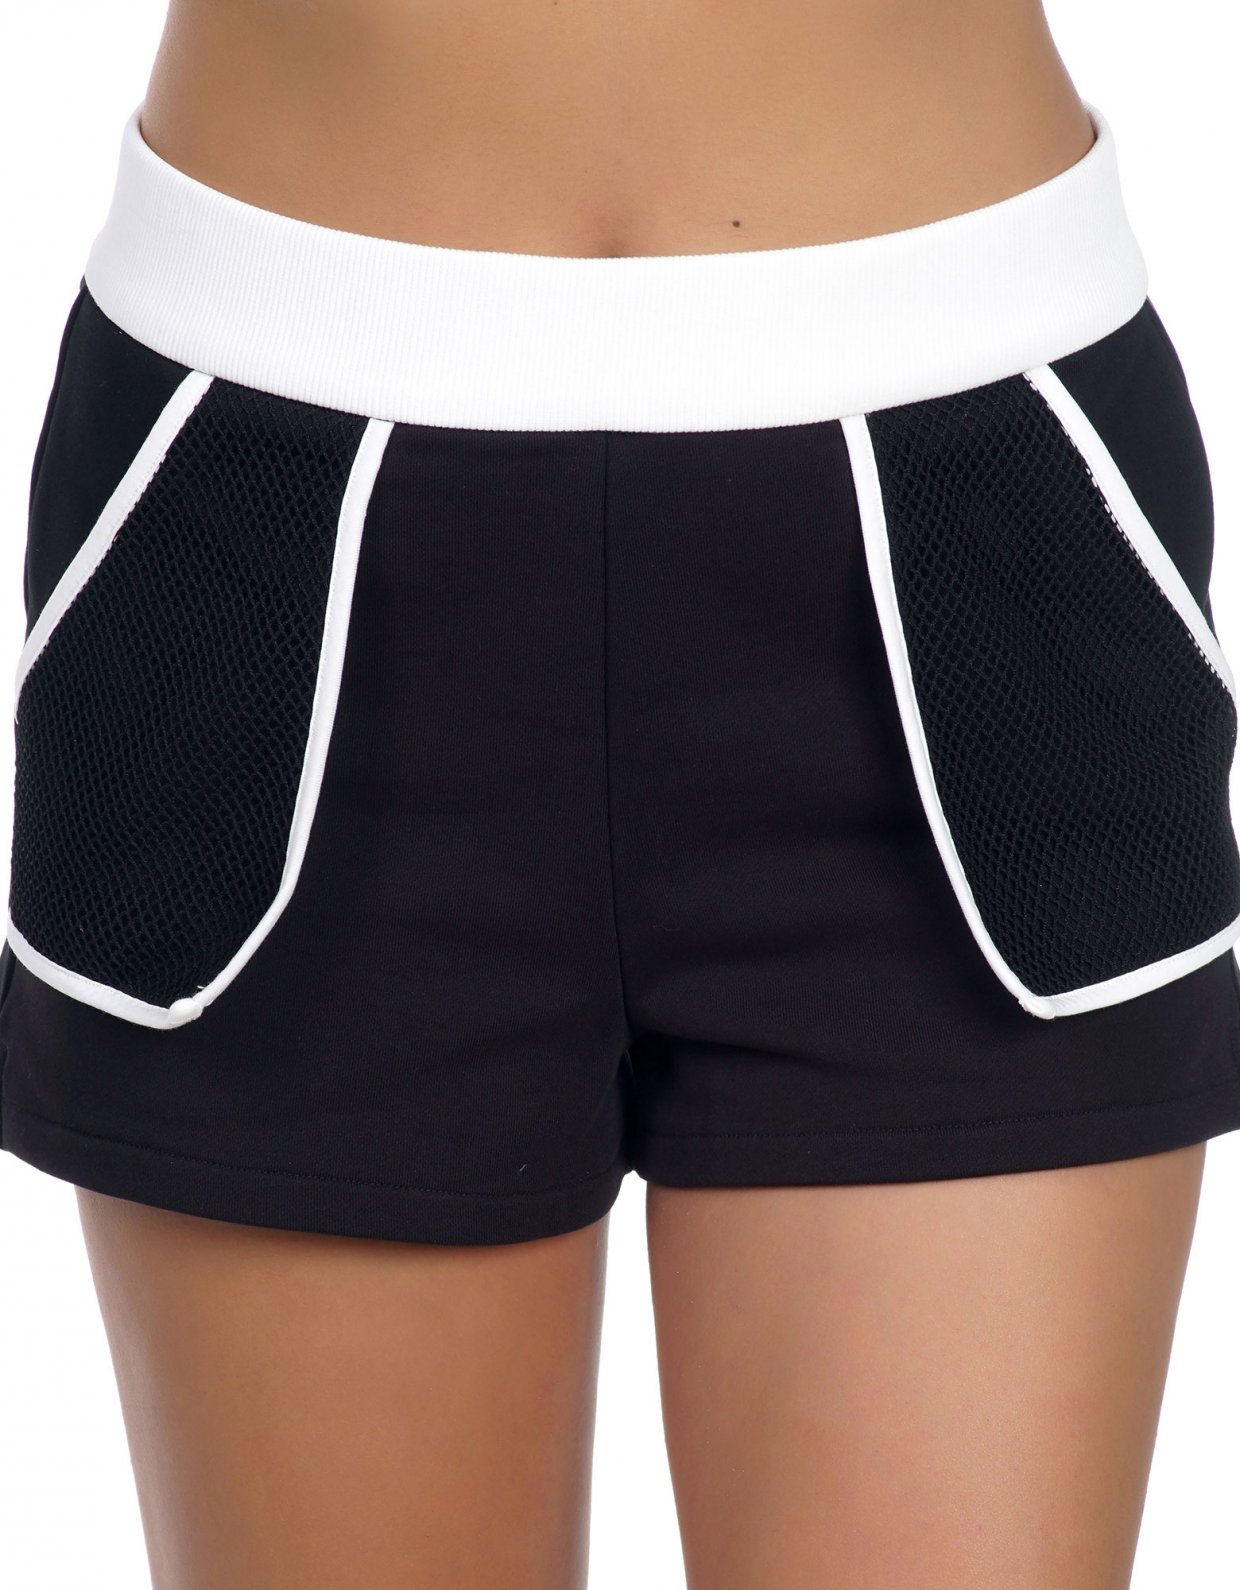 Kendall + Kylie Follow me shorts